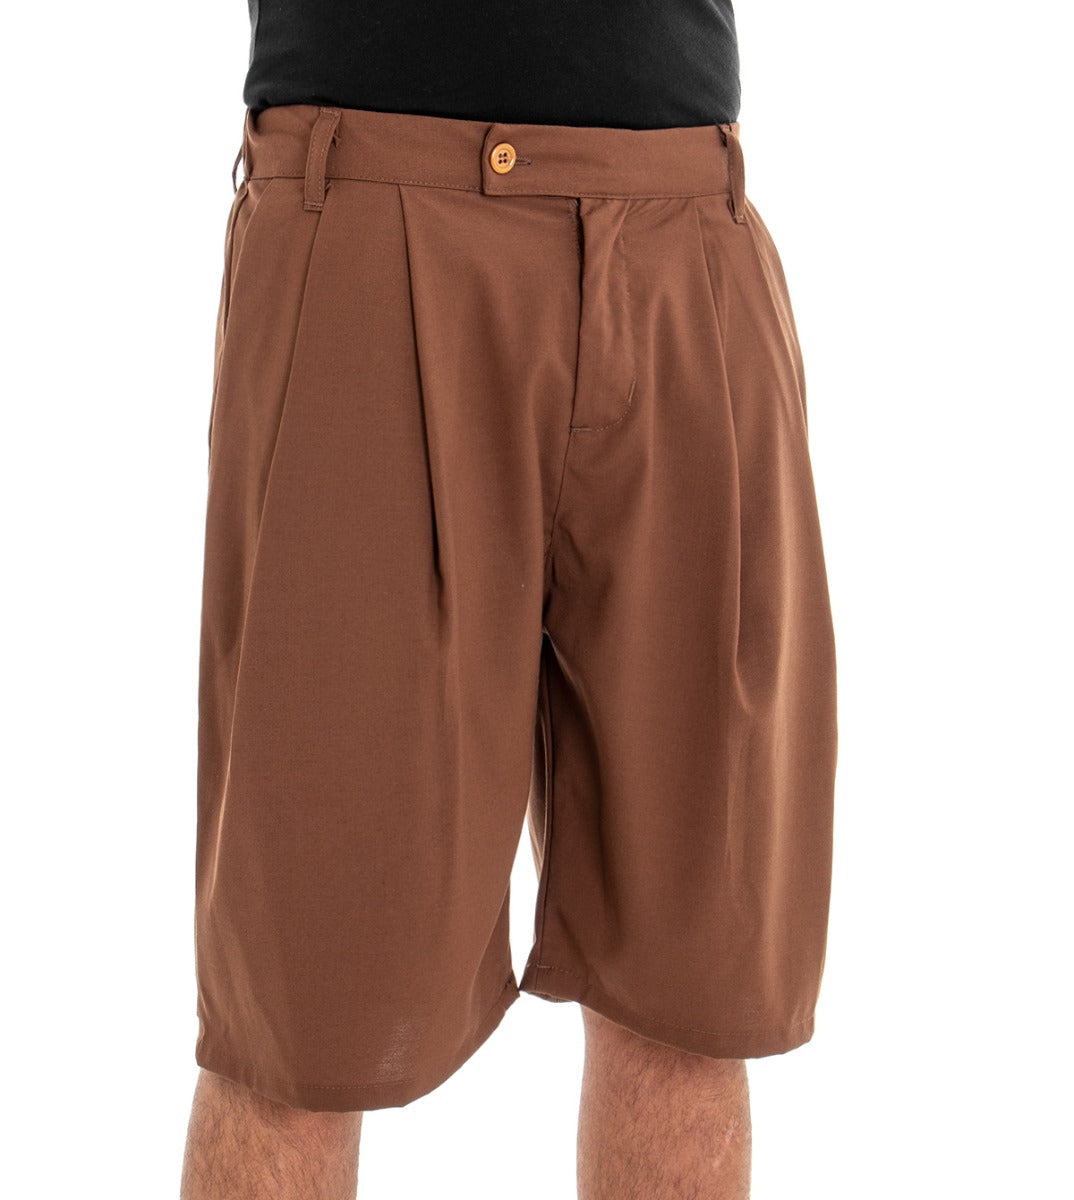 Bermuda Shorts Men's Camel America Pocket GIOSAL-PC1359A